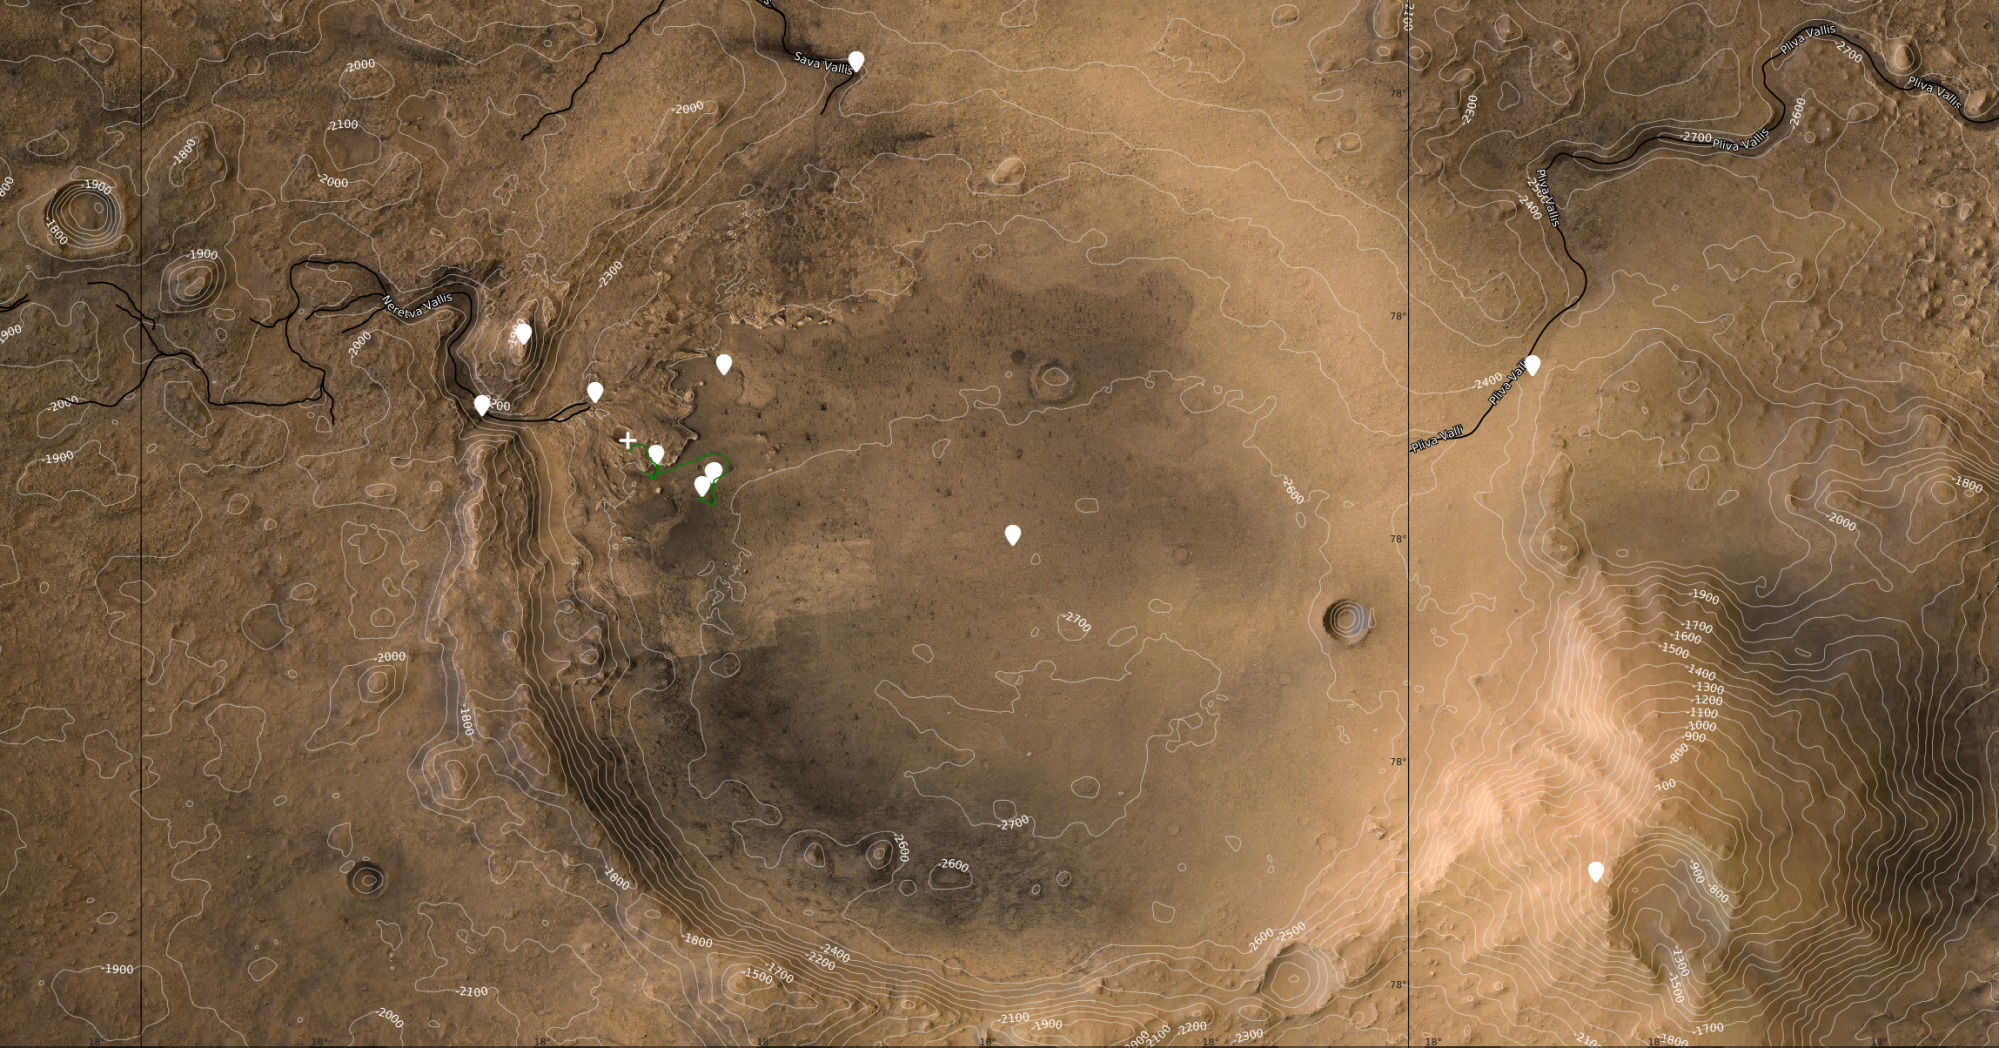 Jezero crater, on Mars